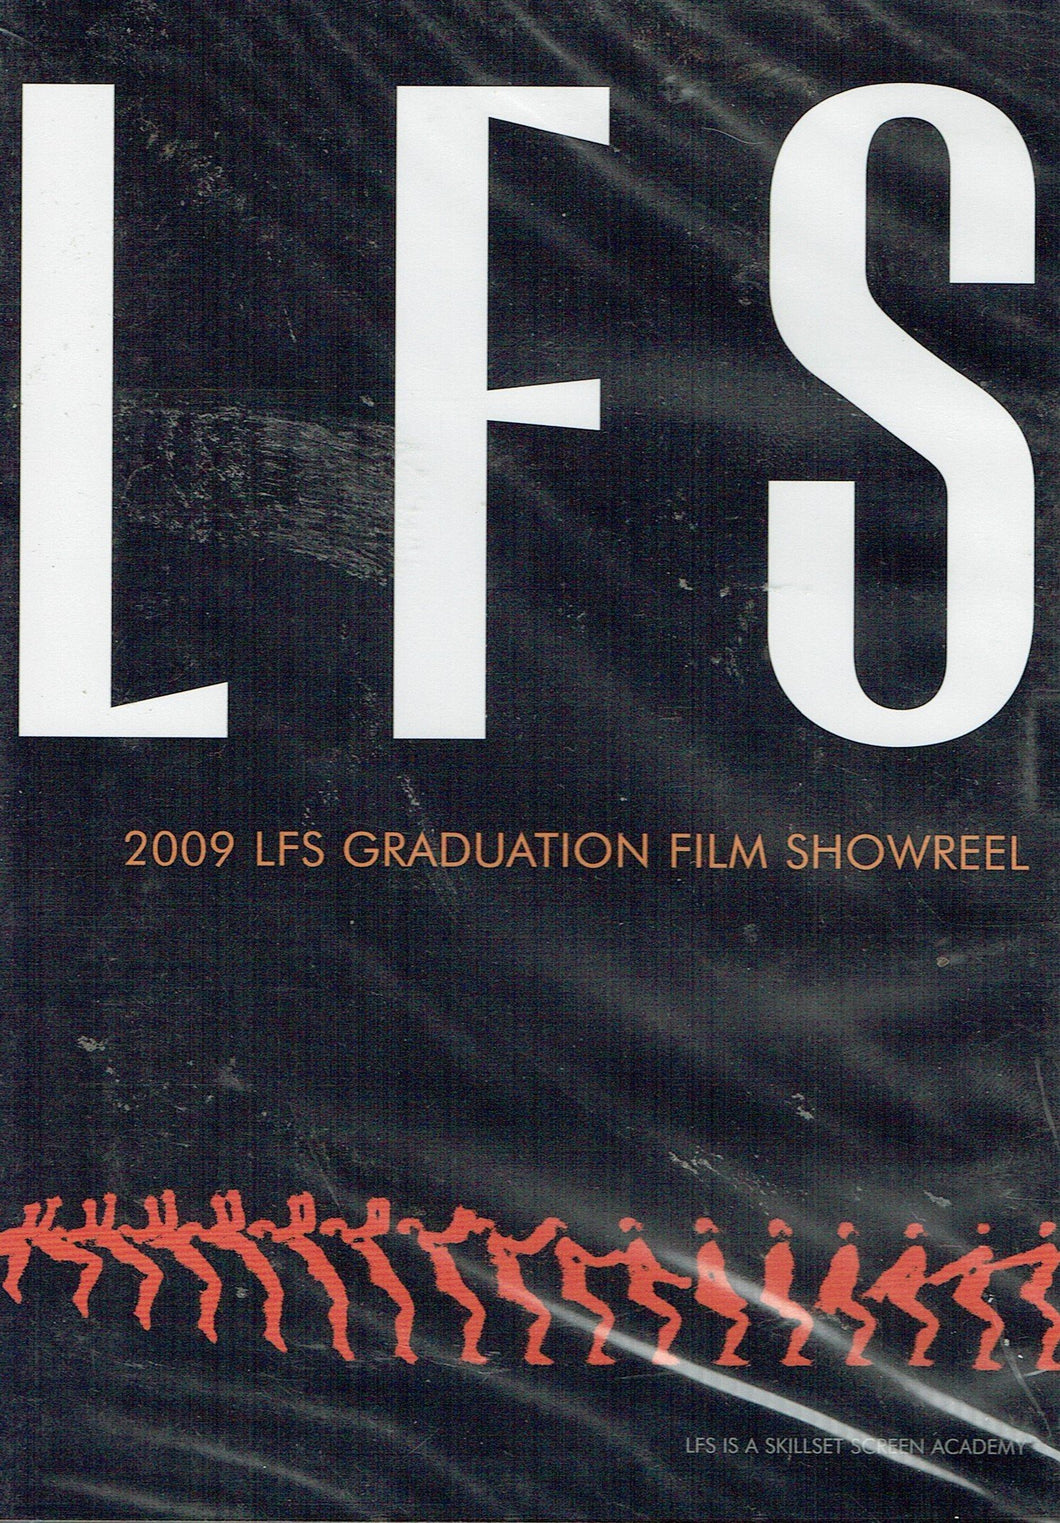 London Film School: 2009 LFS Graduation Film Showreel